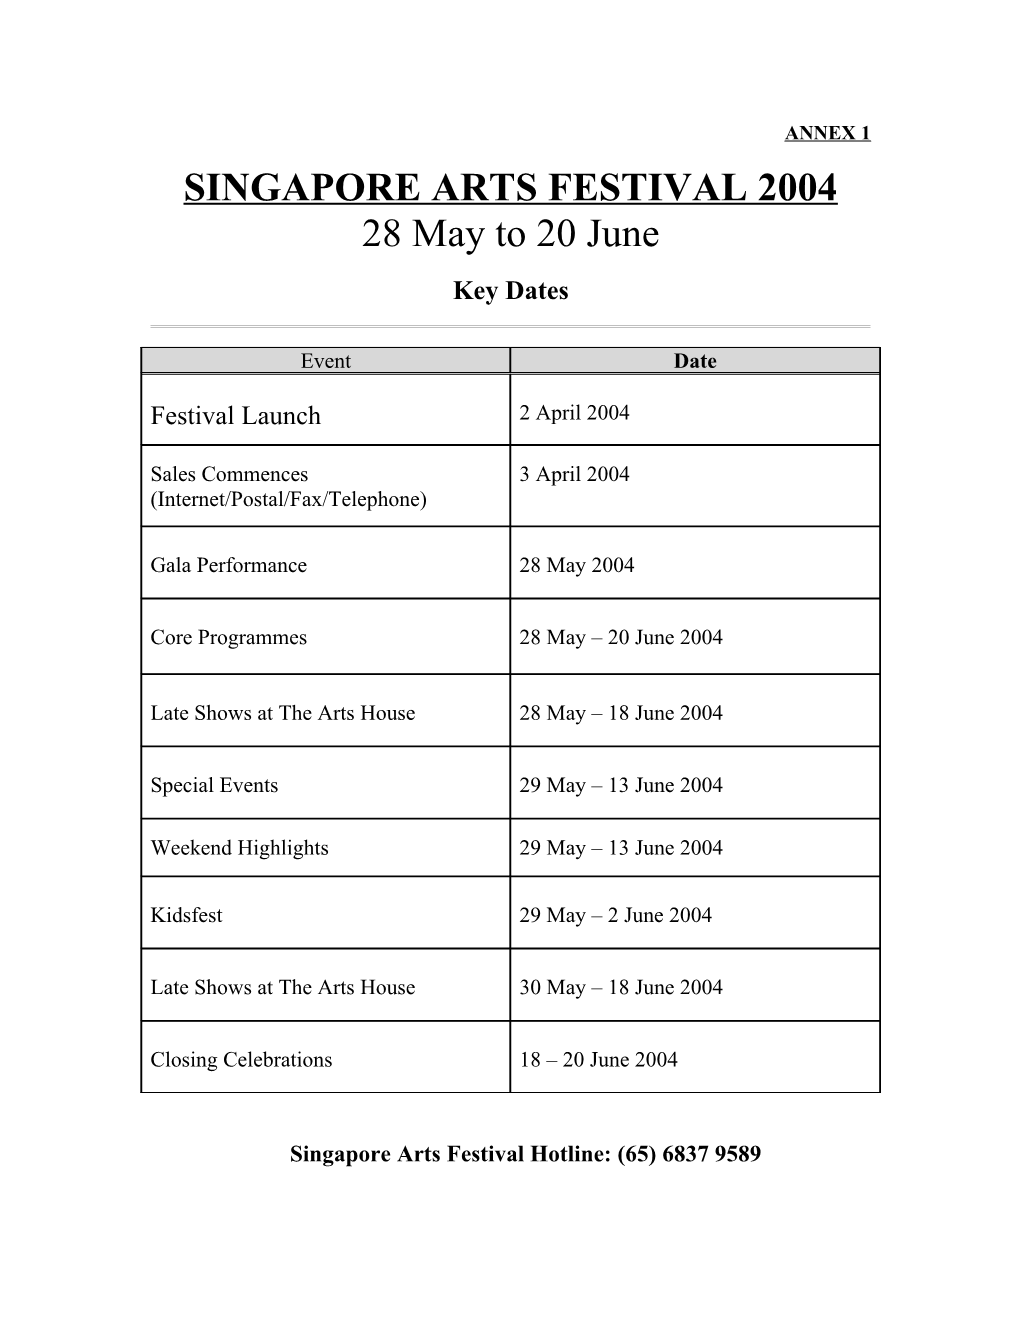 Singapore Arts Festival Hotline: (65) 6837 9589